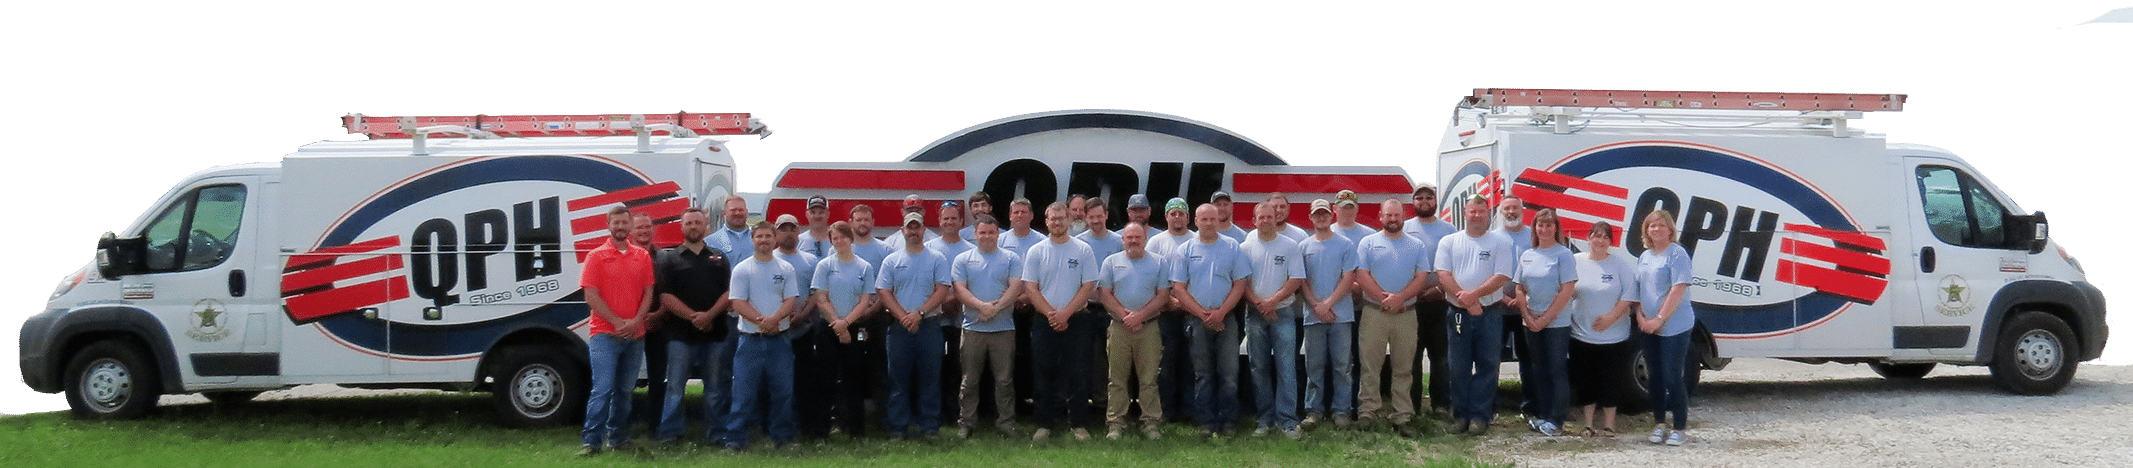 QPH Indiana Team Photo